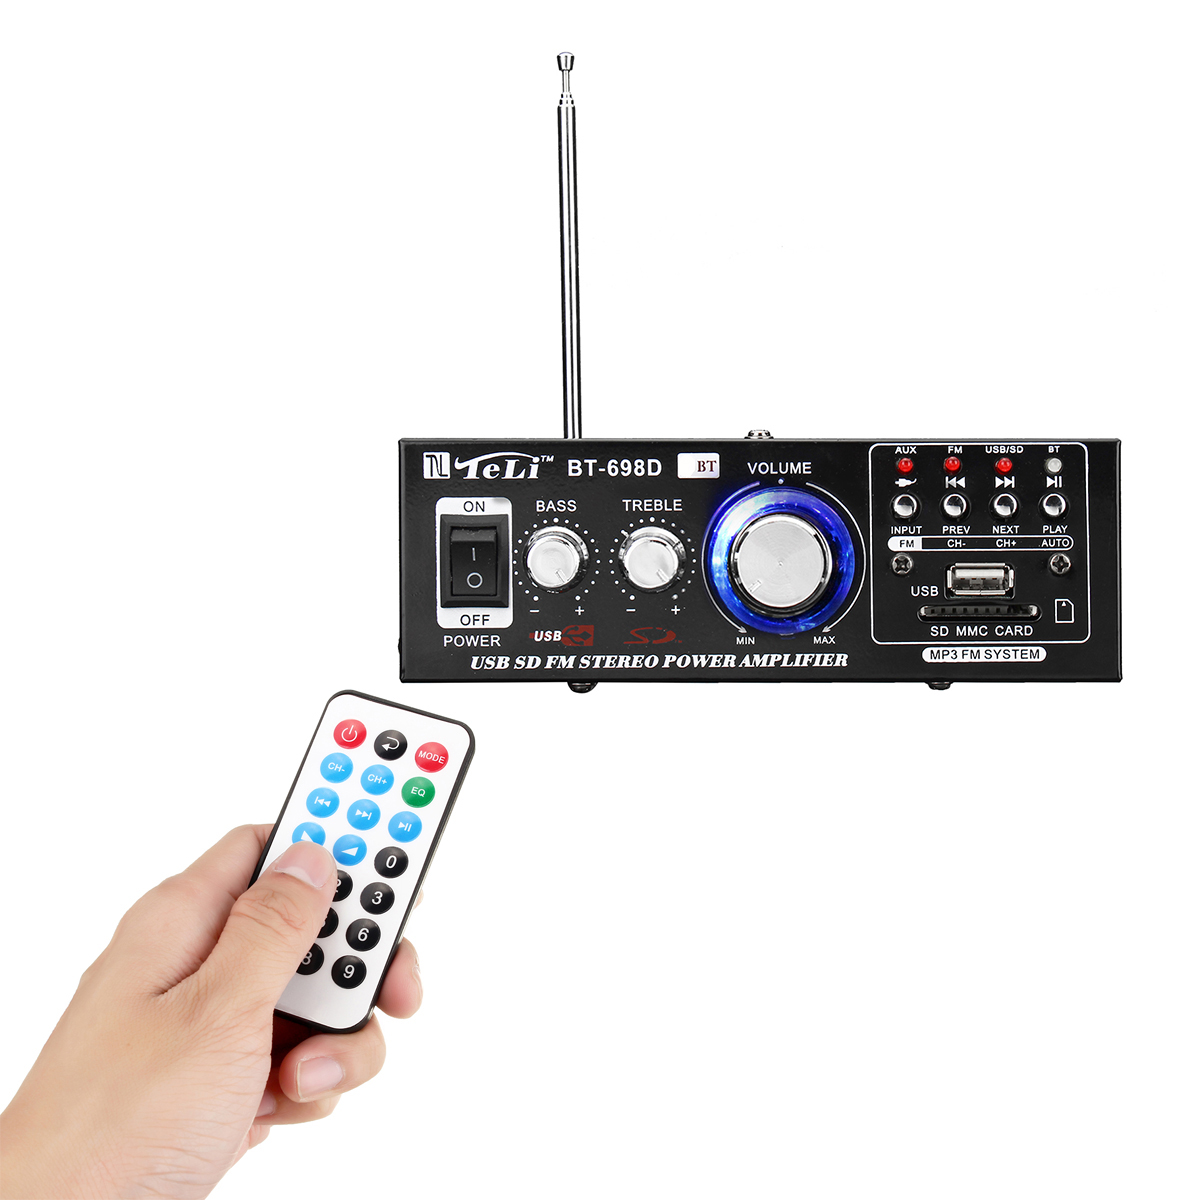 USB-SD-HIFI-Power-Amplifier-HiFi-Digital-Audio-Stereo-Amplifier-bluetooth-FM-Radio-Equipment-1423186-3